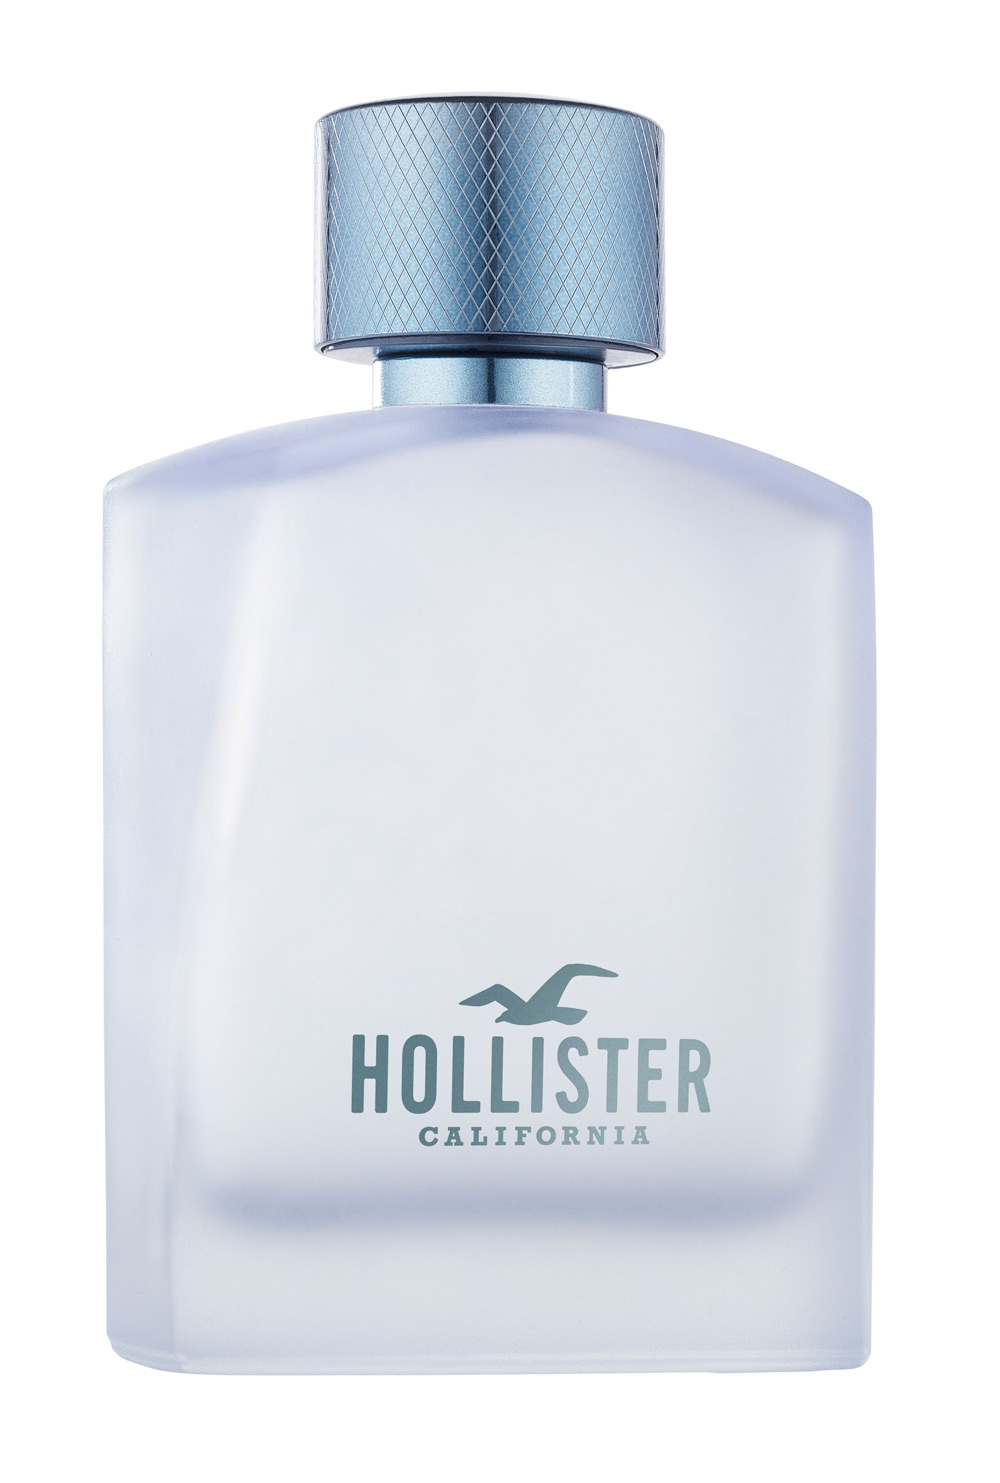 Free Wave For Him Hollister cologne - a new fragrance for men 2018